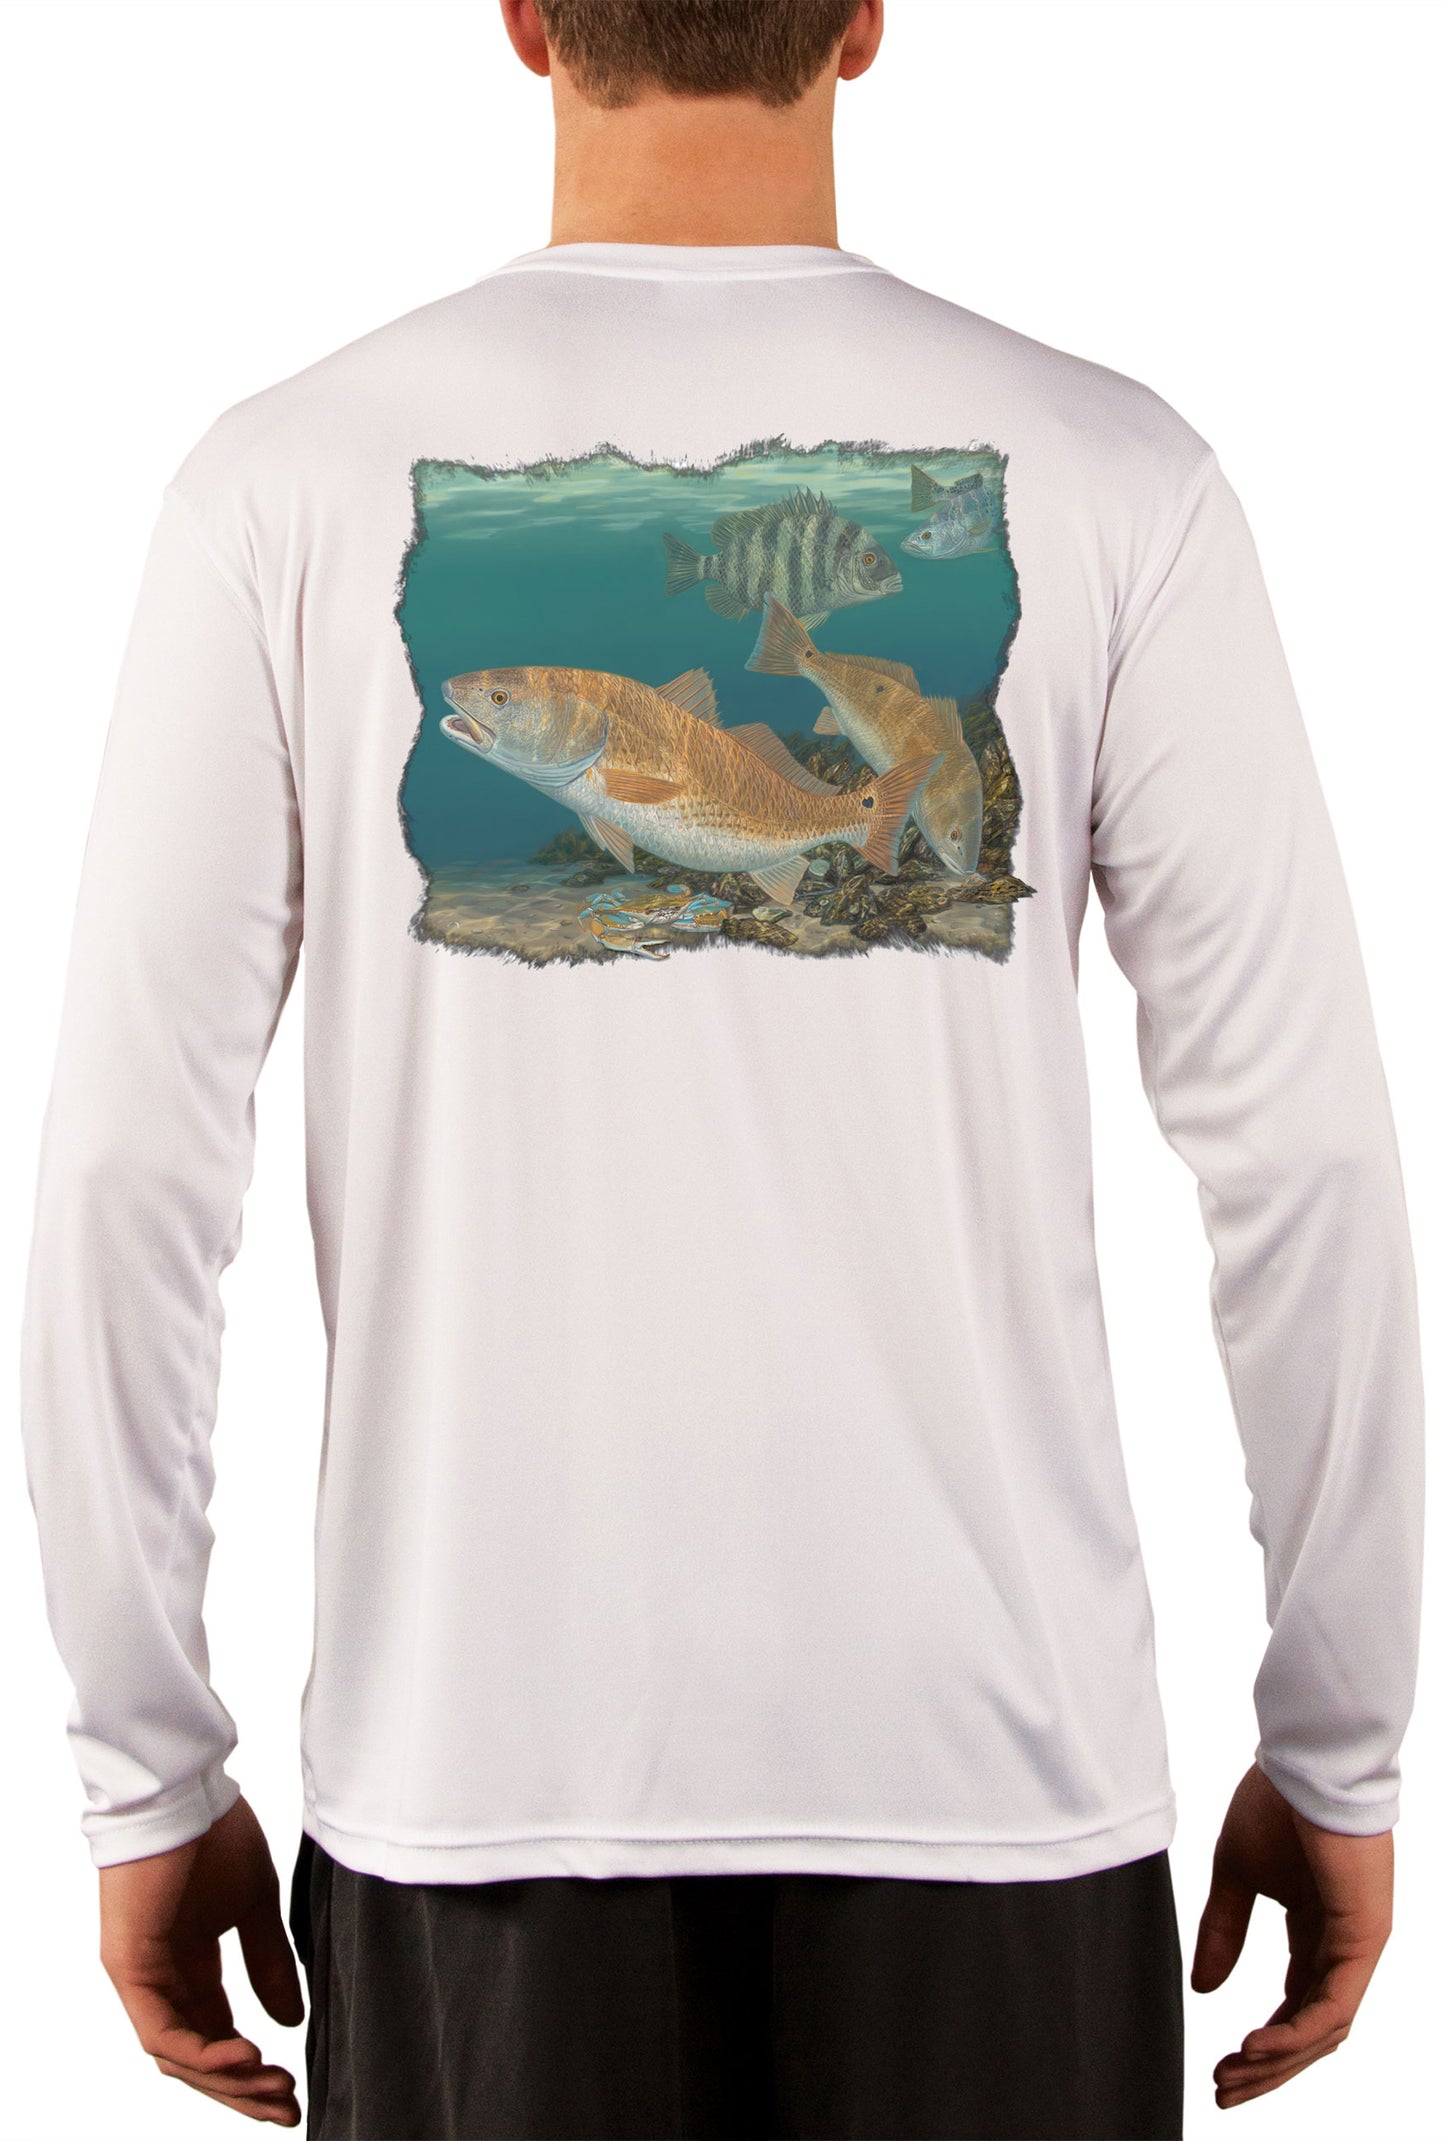 Redfish Sheepshead Design by Randy McGovern Fishing Shirts For Men